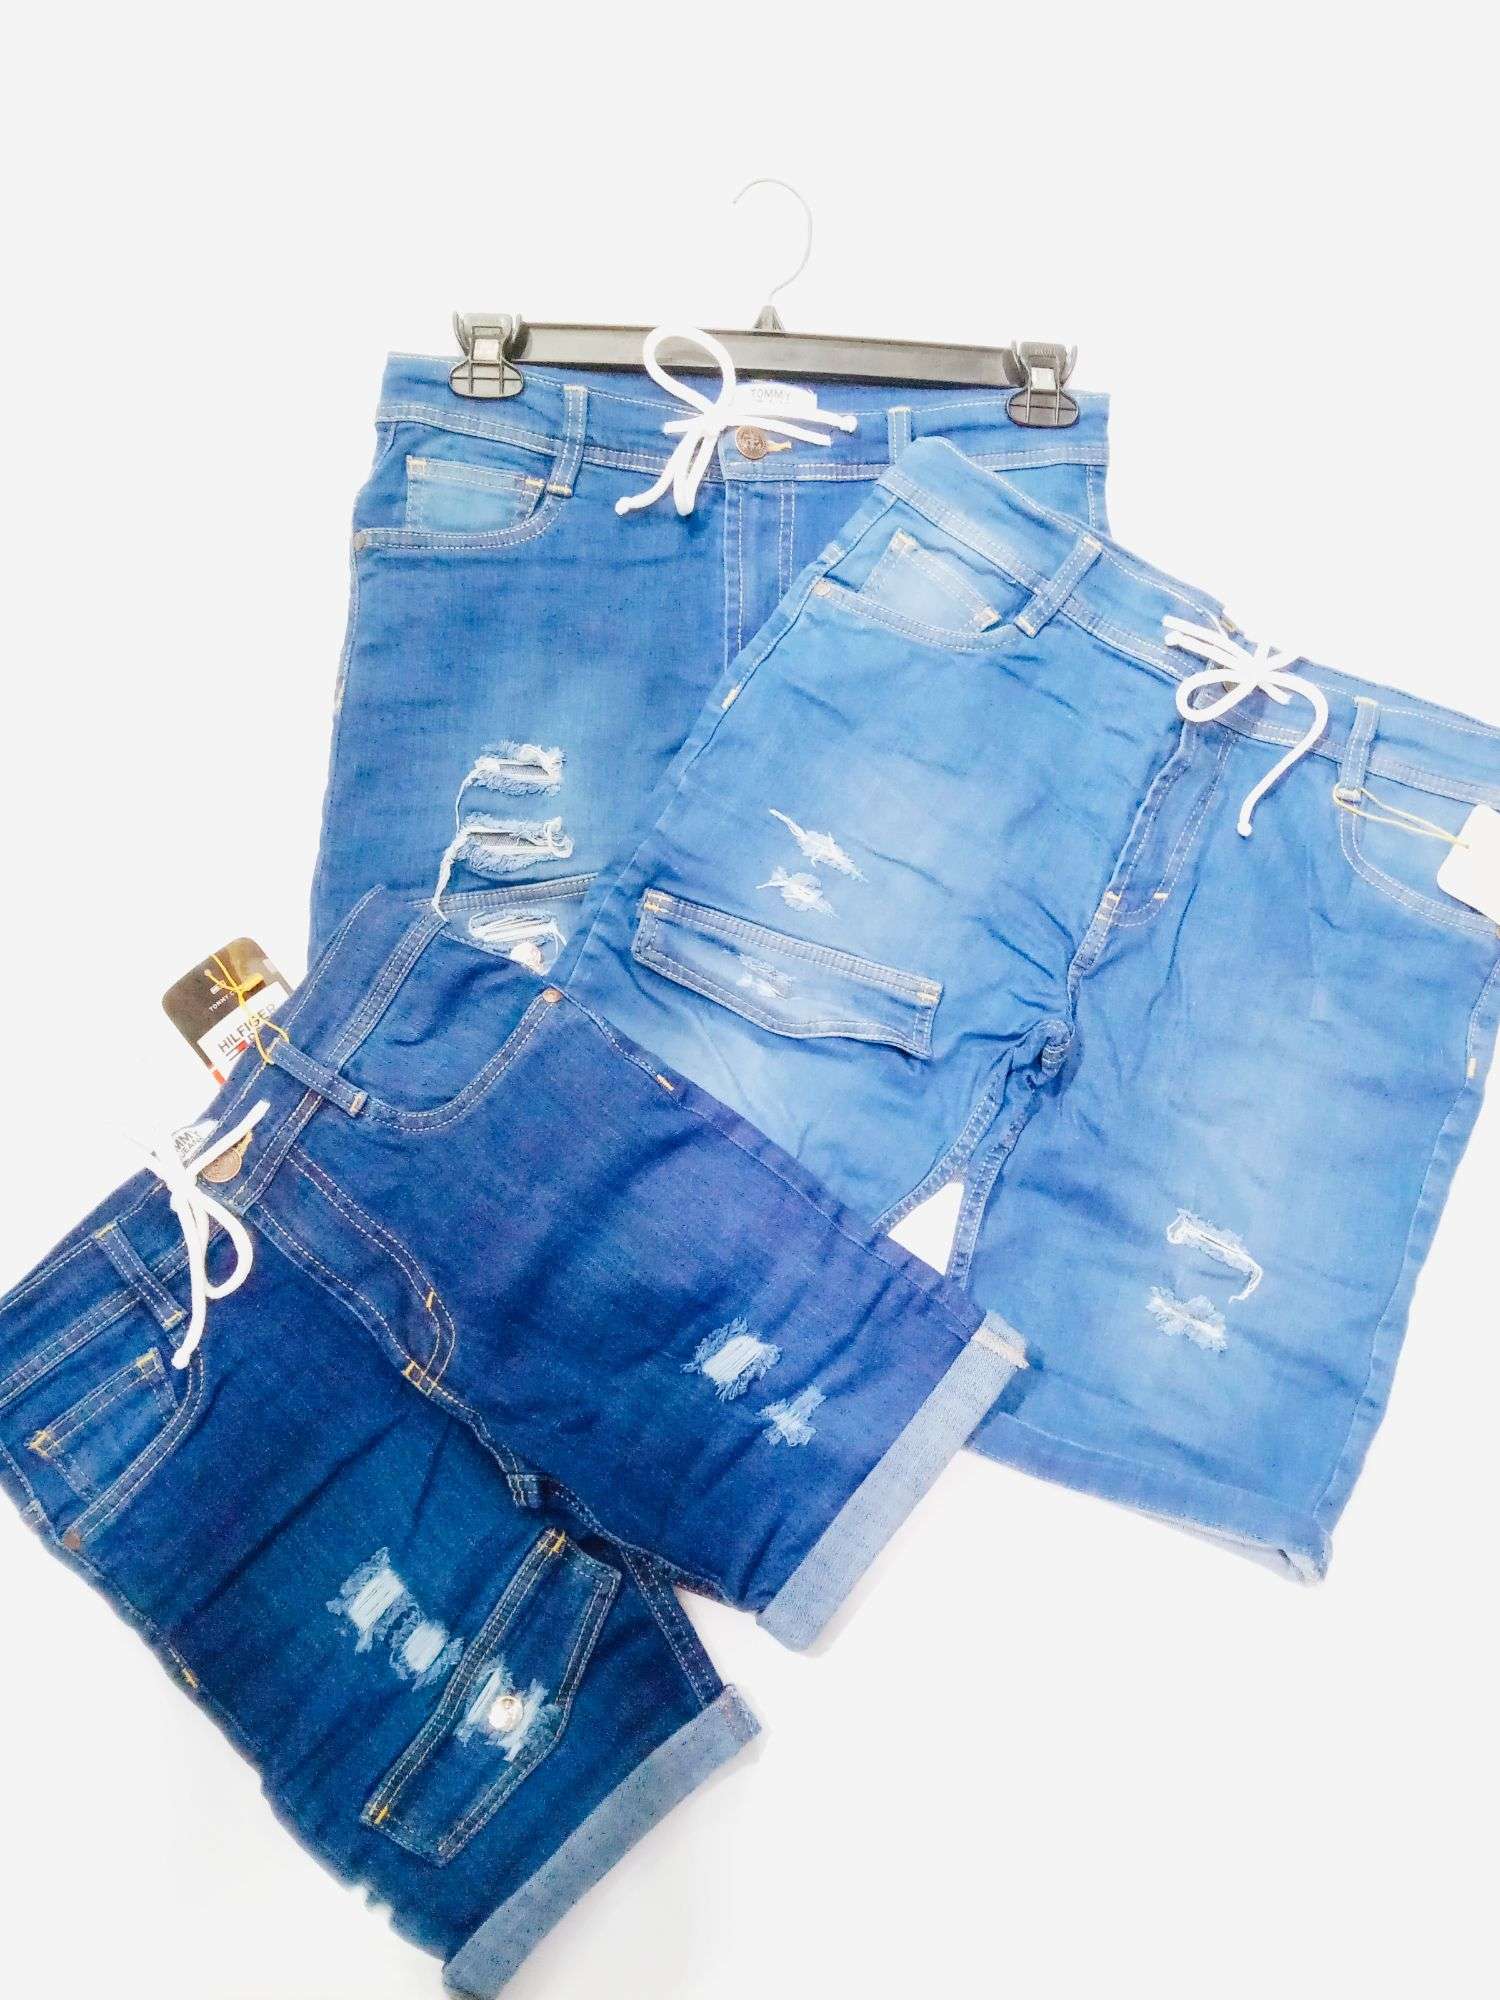 Blue Mens Rugged Denim Shorts at Rs 500 in Delhi | ID: 19019727397